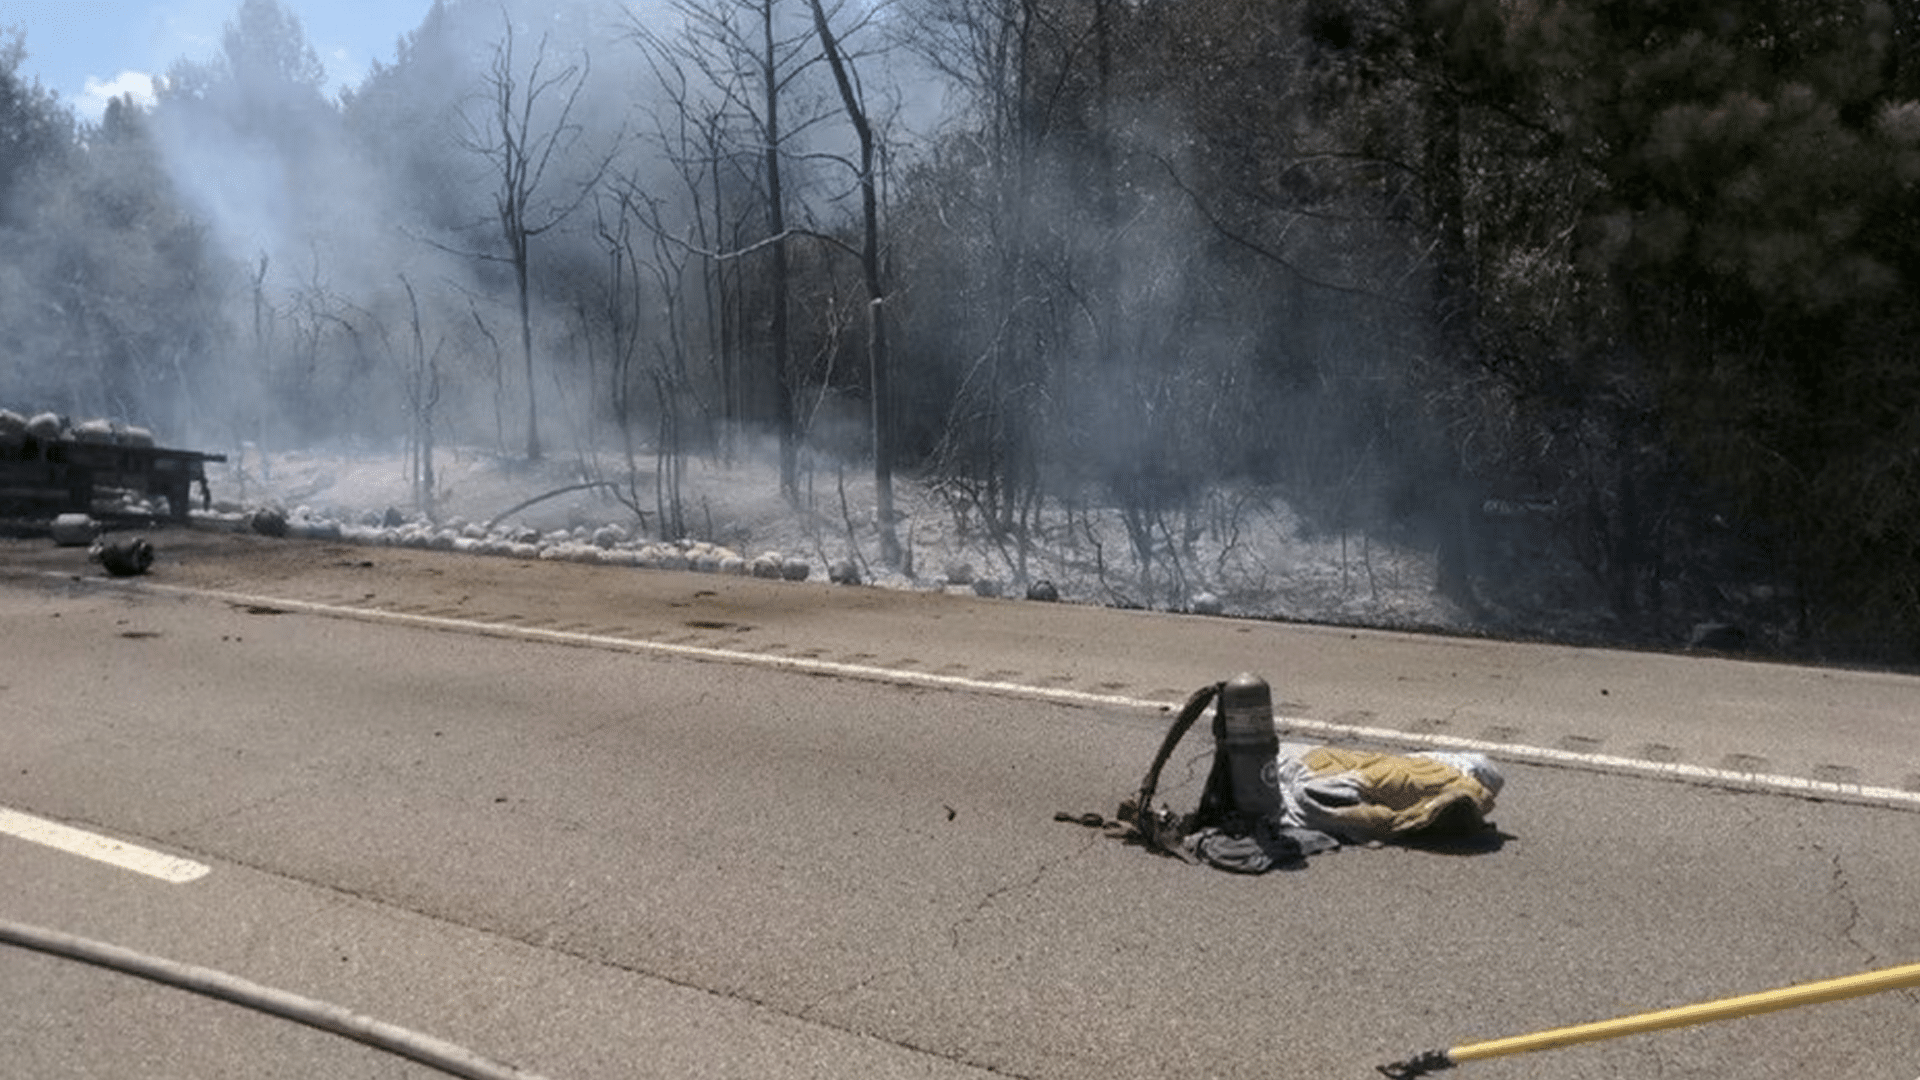 Interstate 59 propane bottle explosion